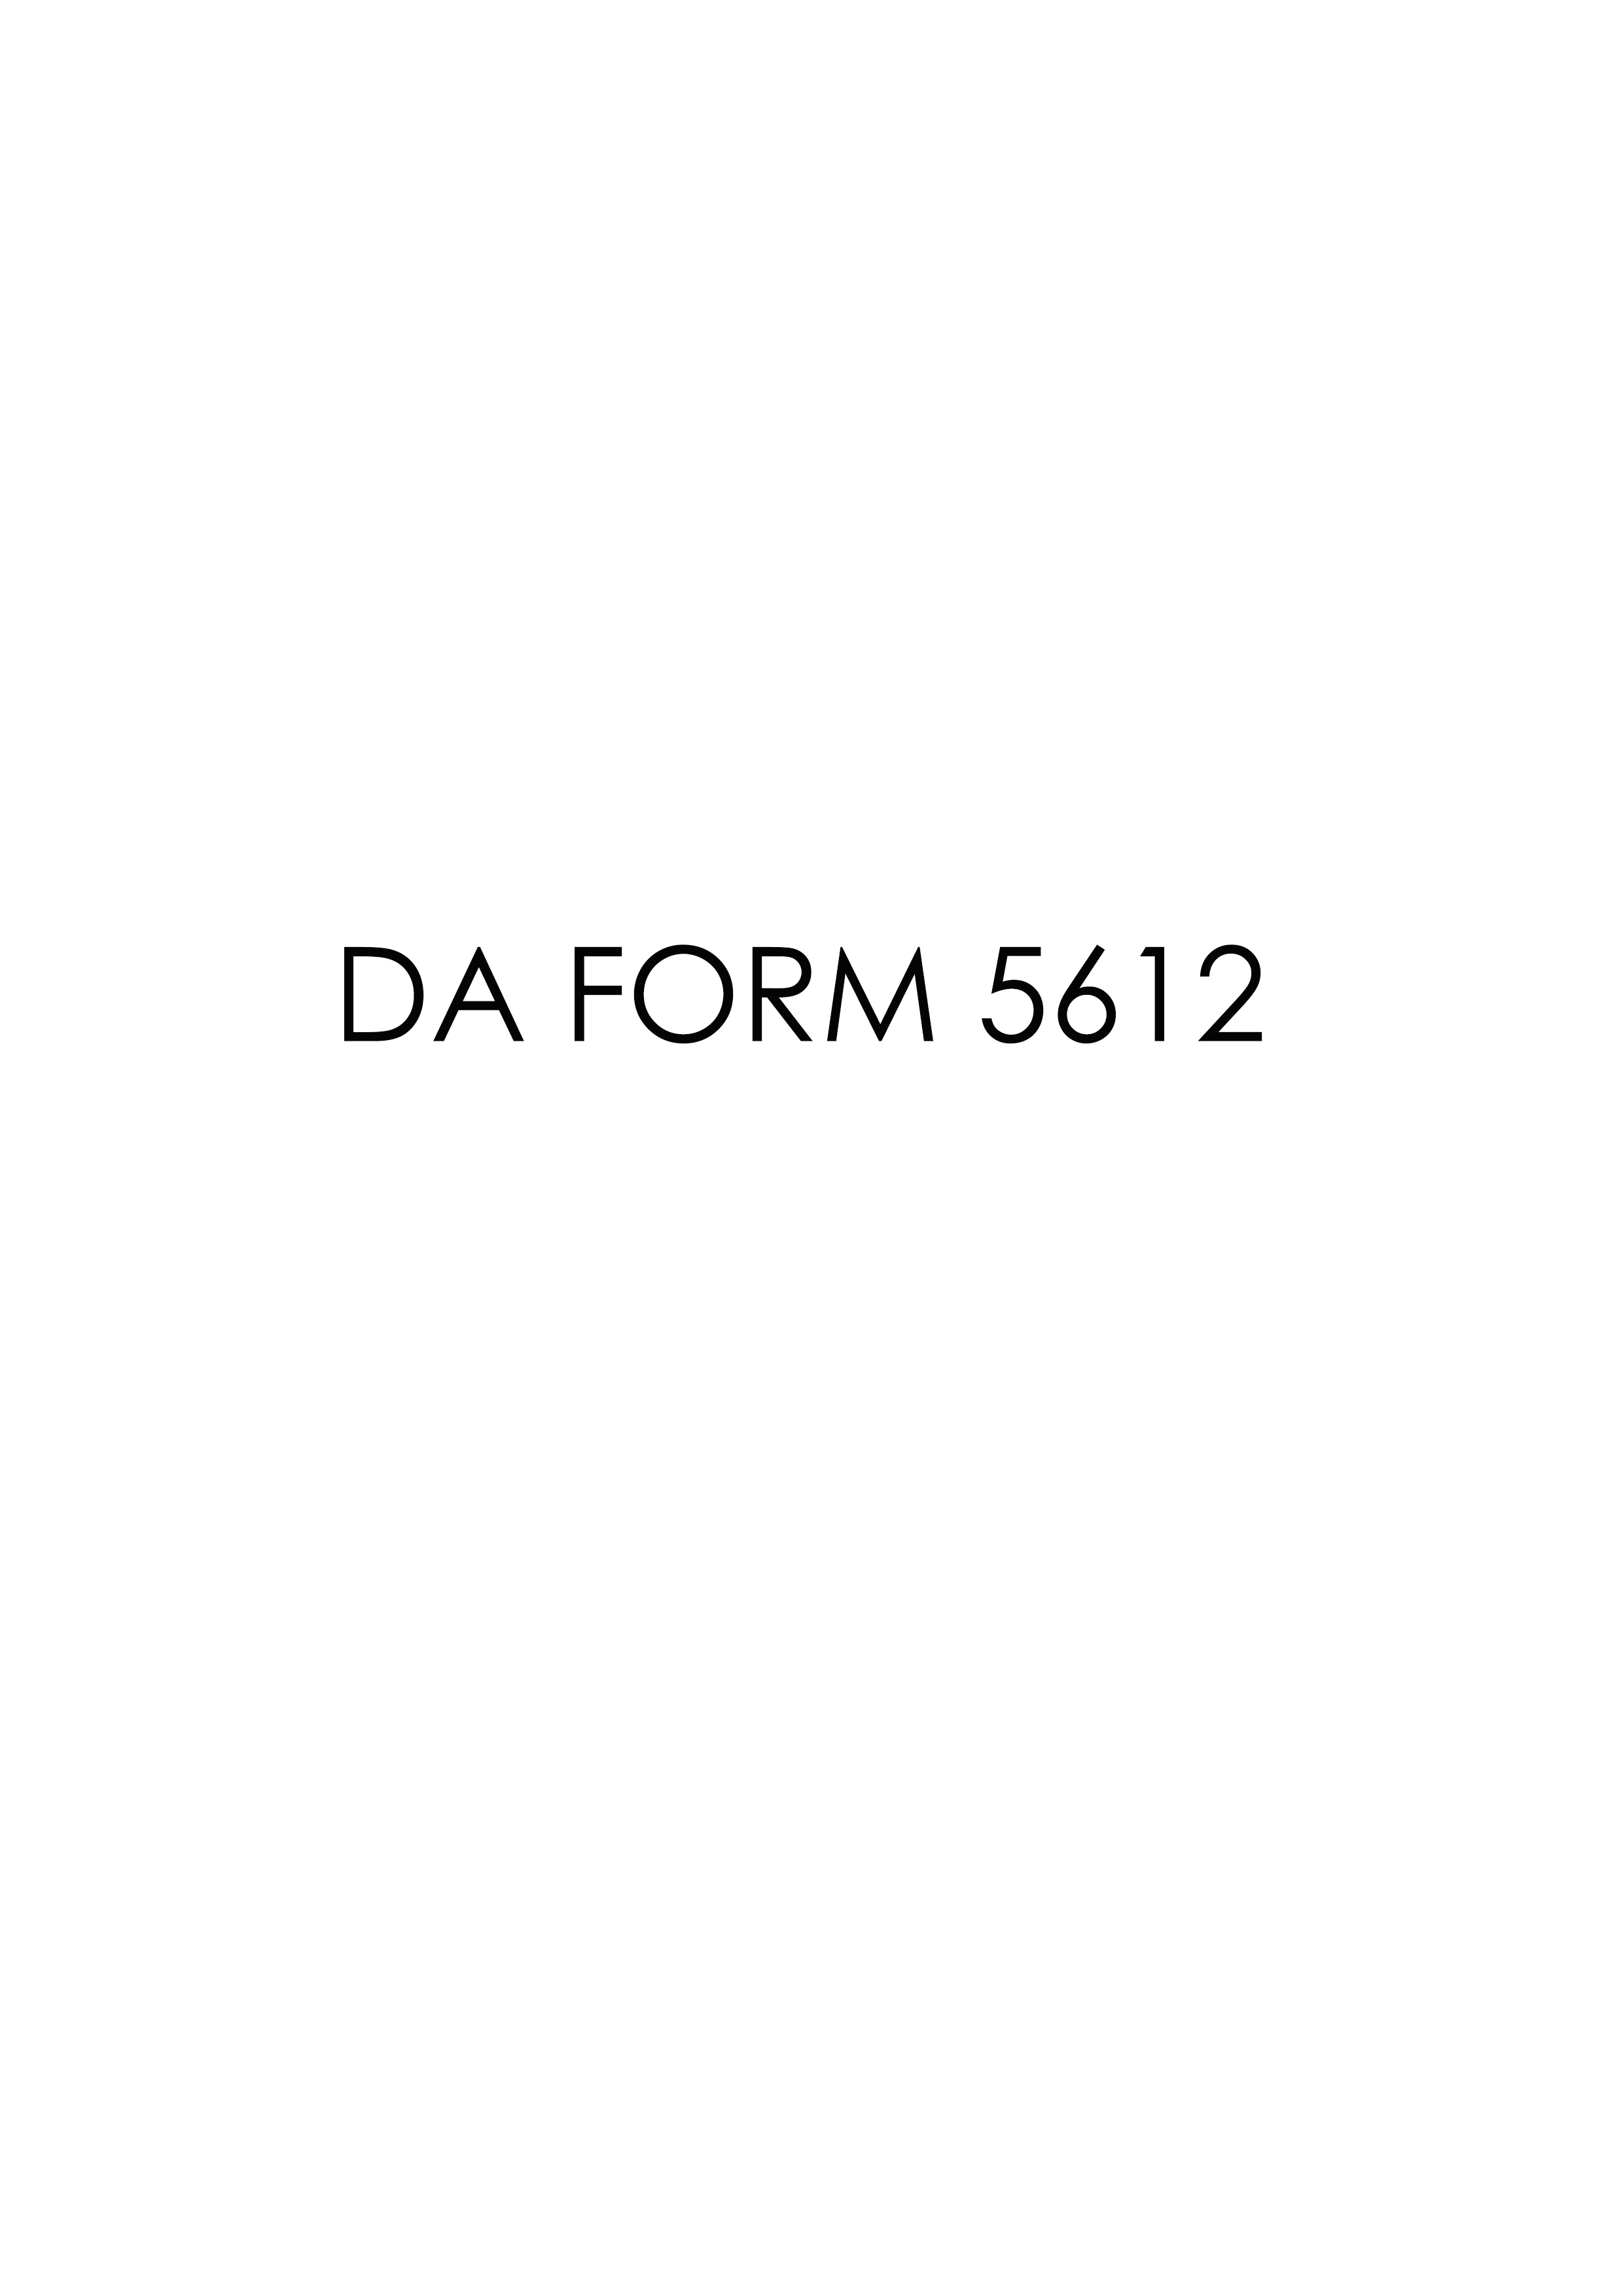 da Form 5612 fillable